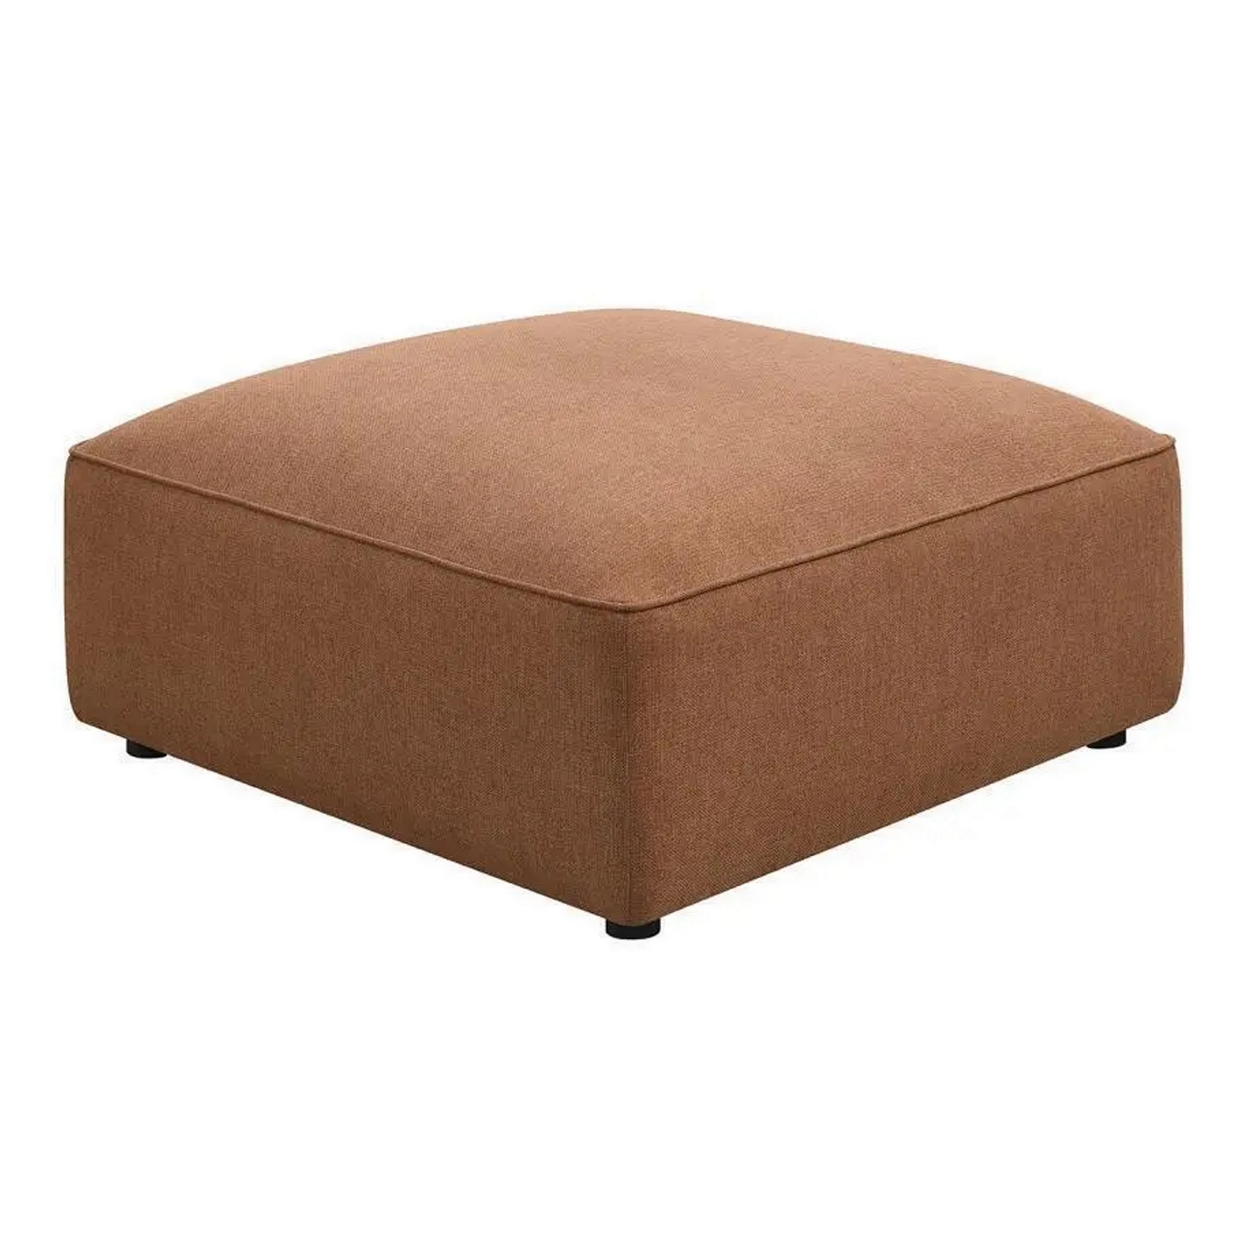 Hani 39 Inch Foam Ottoman, Pocket Coil Seat, Terracotta Brown Upholstery- Saltoro Sherpi